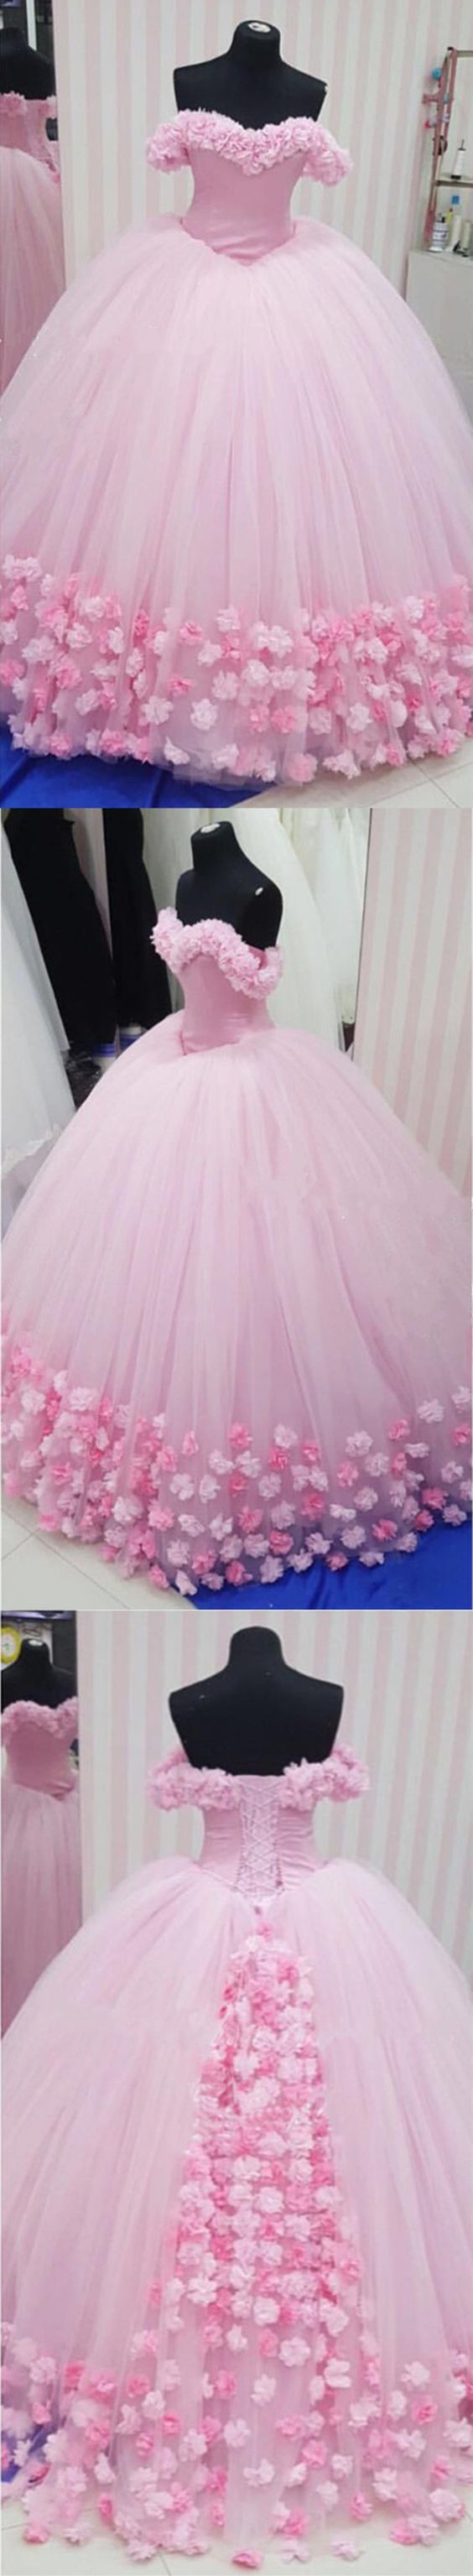 Beautiful Pink Wedding Dress 2018 Flowers Ball Gowns Wedding Dresses